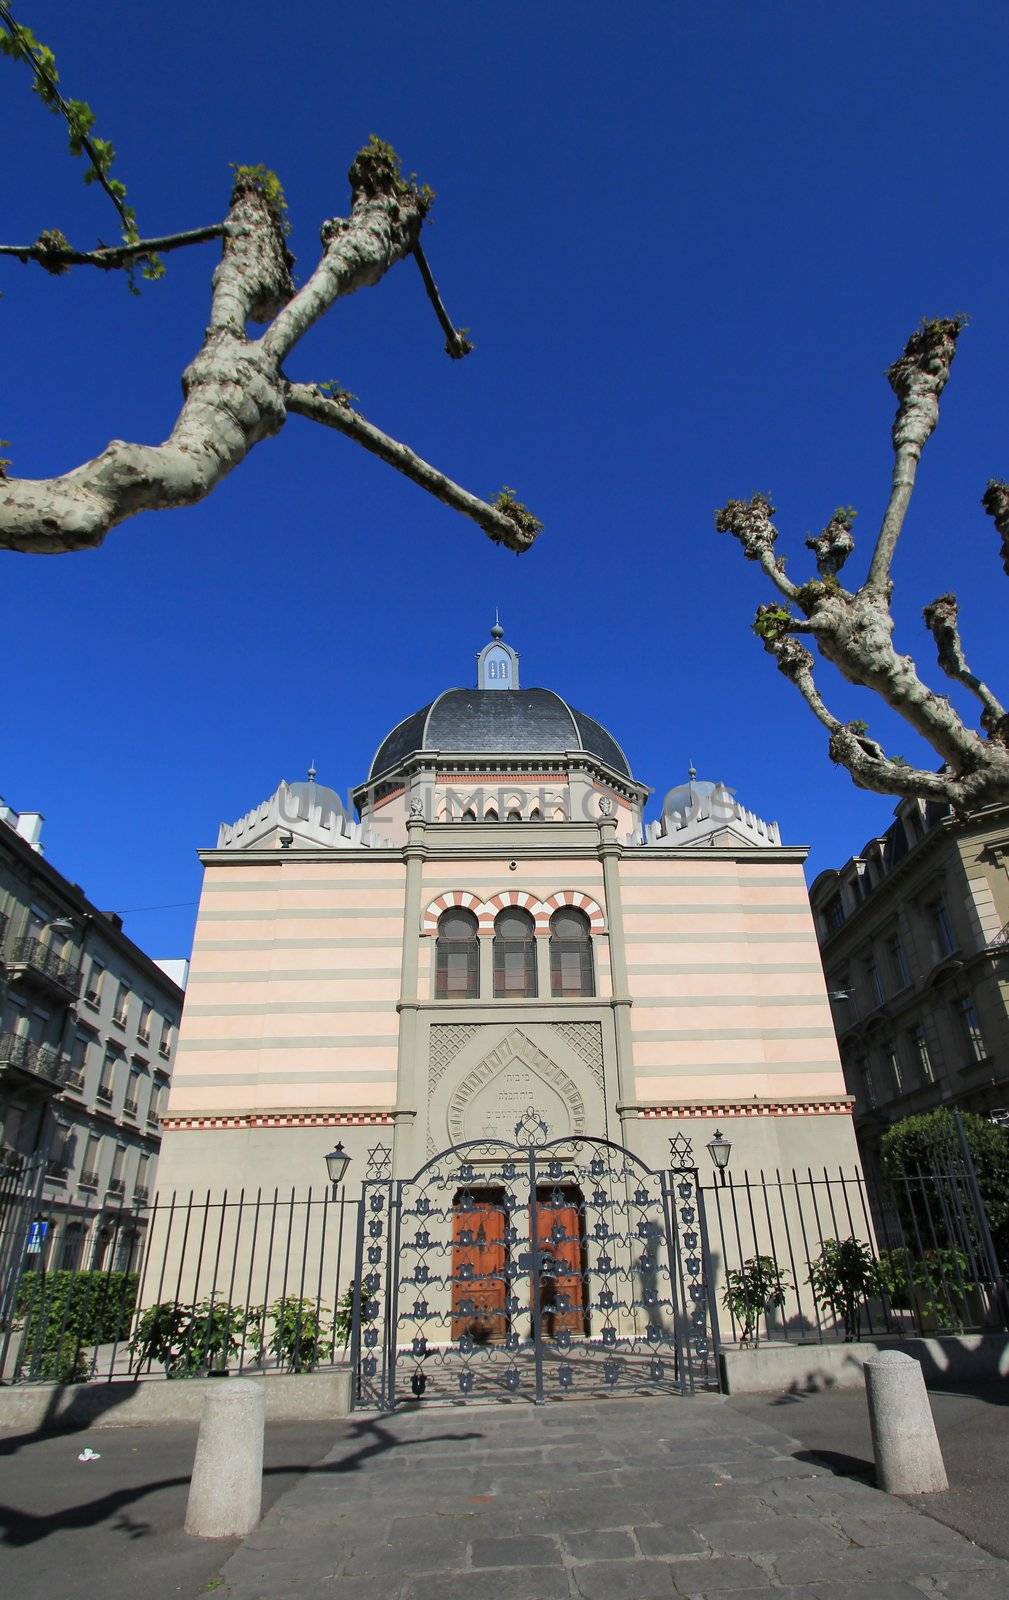 Beth Yaakov Synagogue, Geneva, Switzerland by Elenaphotos21